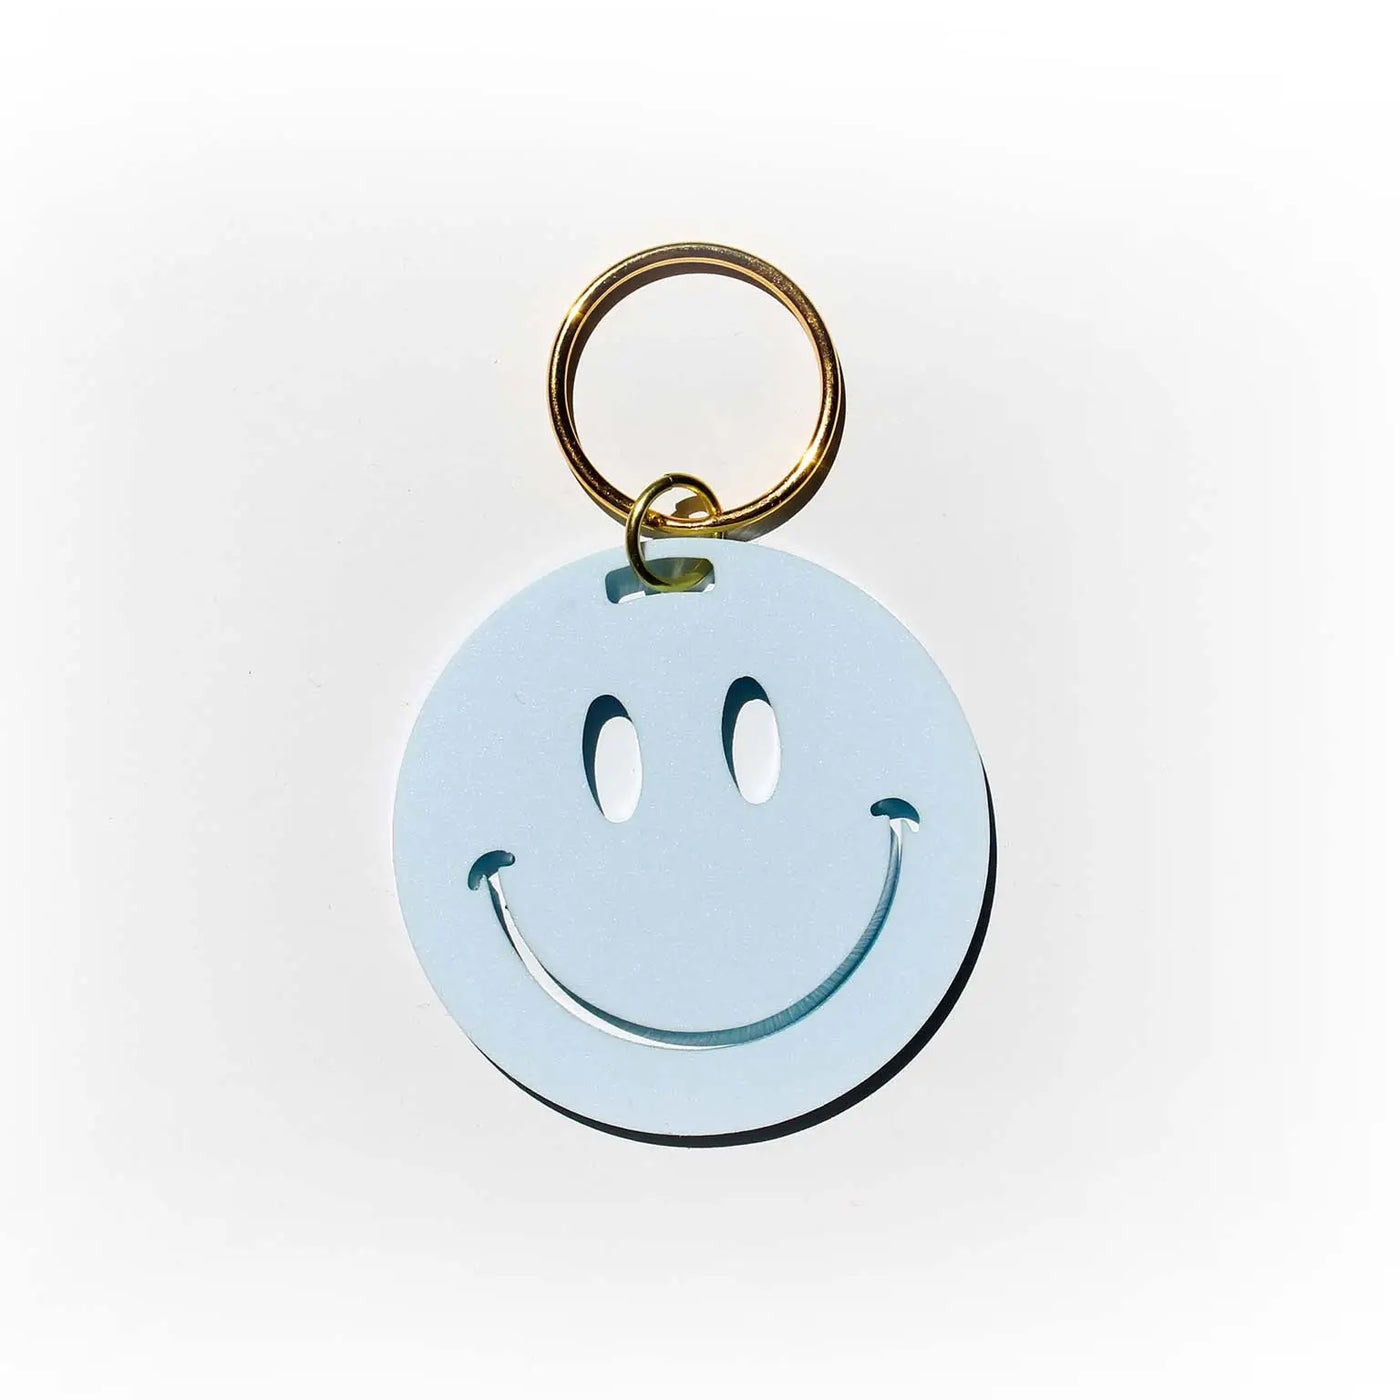 Smile Key Chain